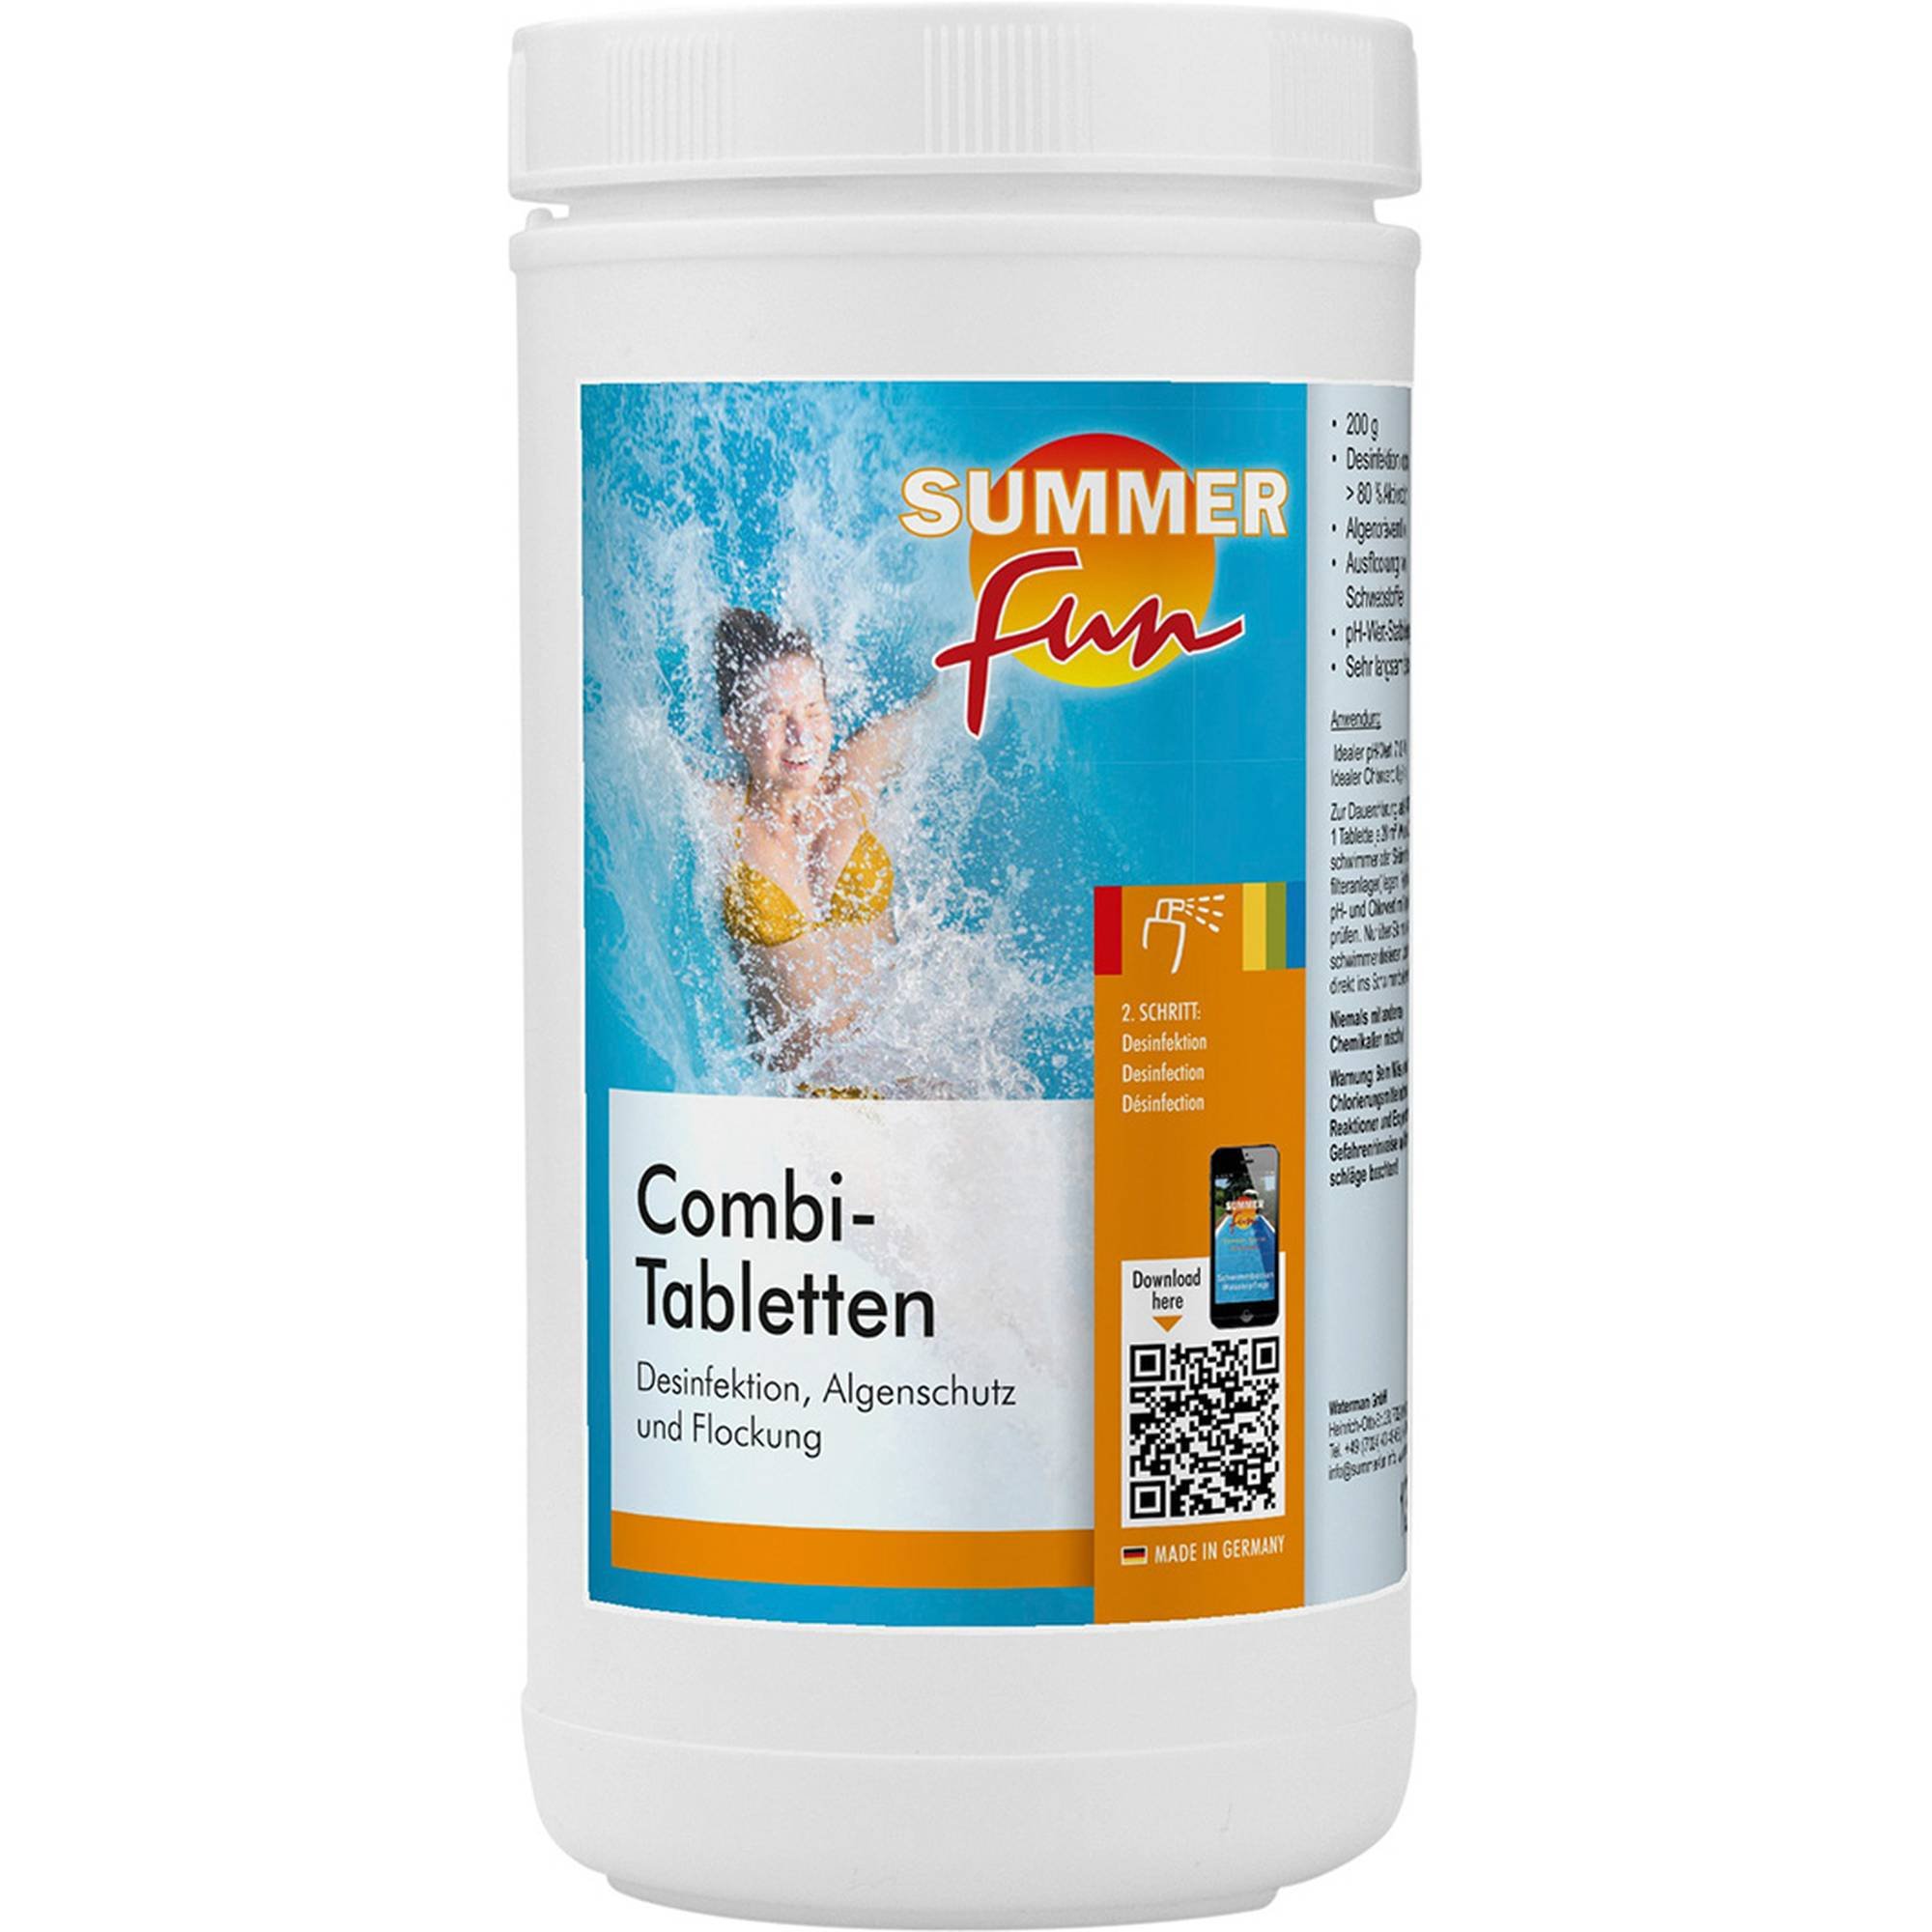 Summer Fun - Combi-Tabletten - 200g Tabletten, 1,2 kg